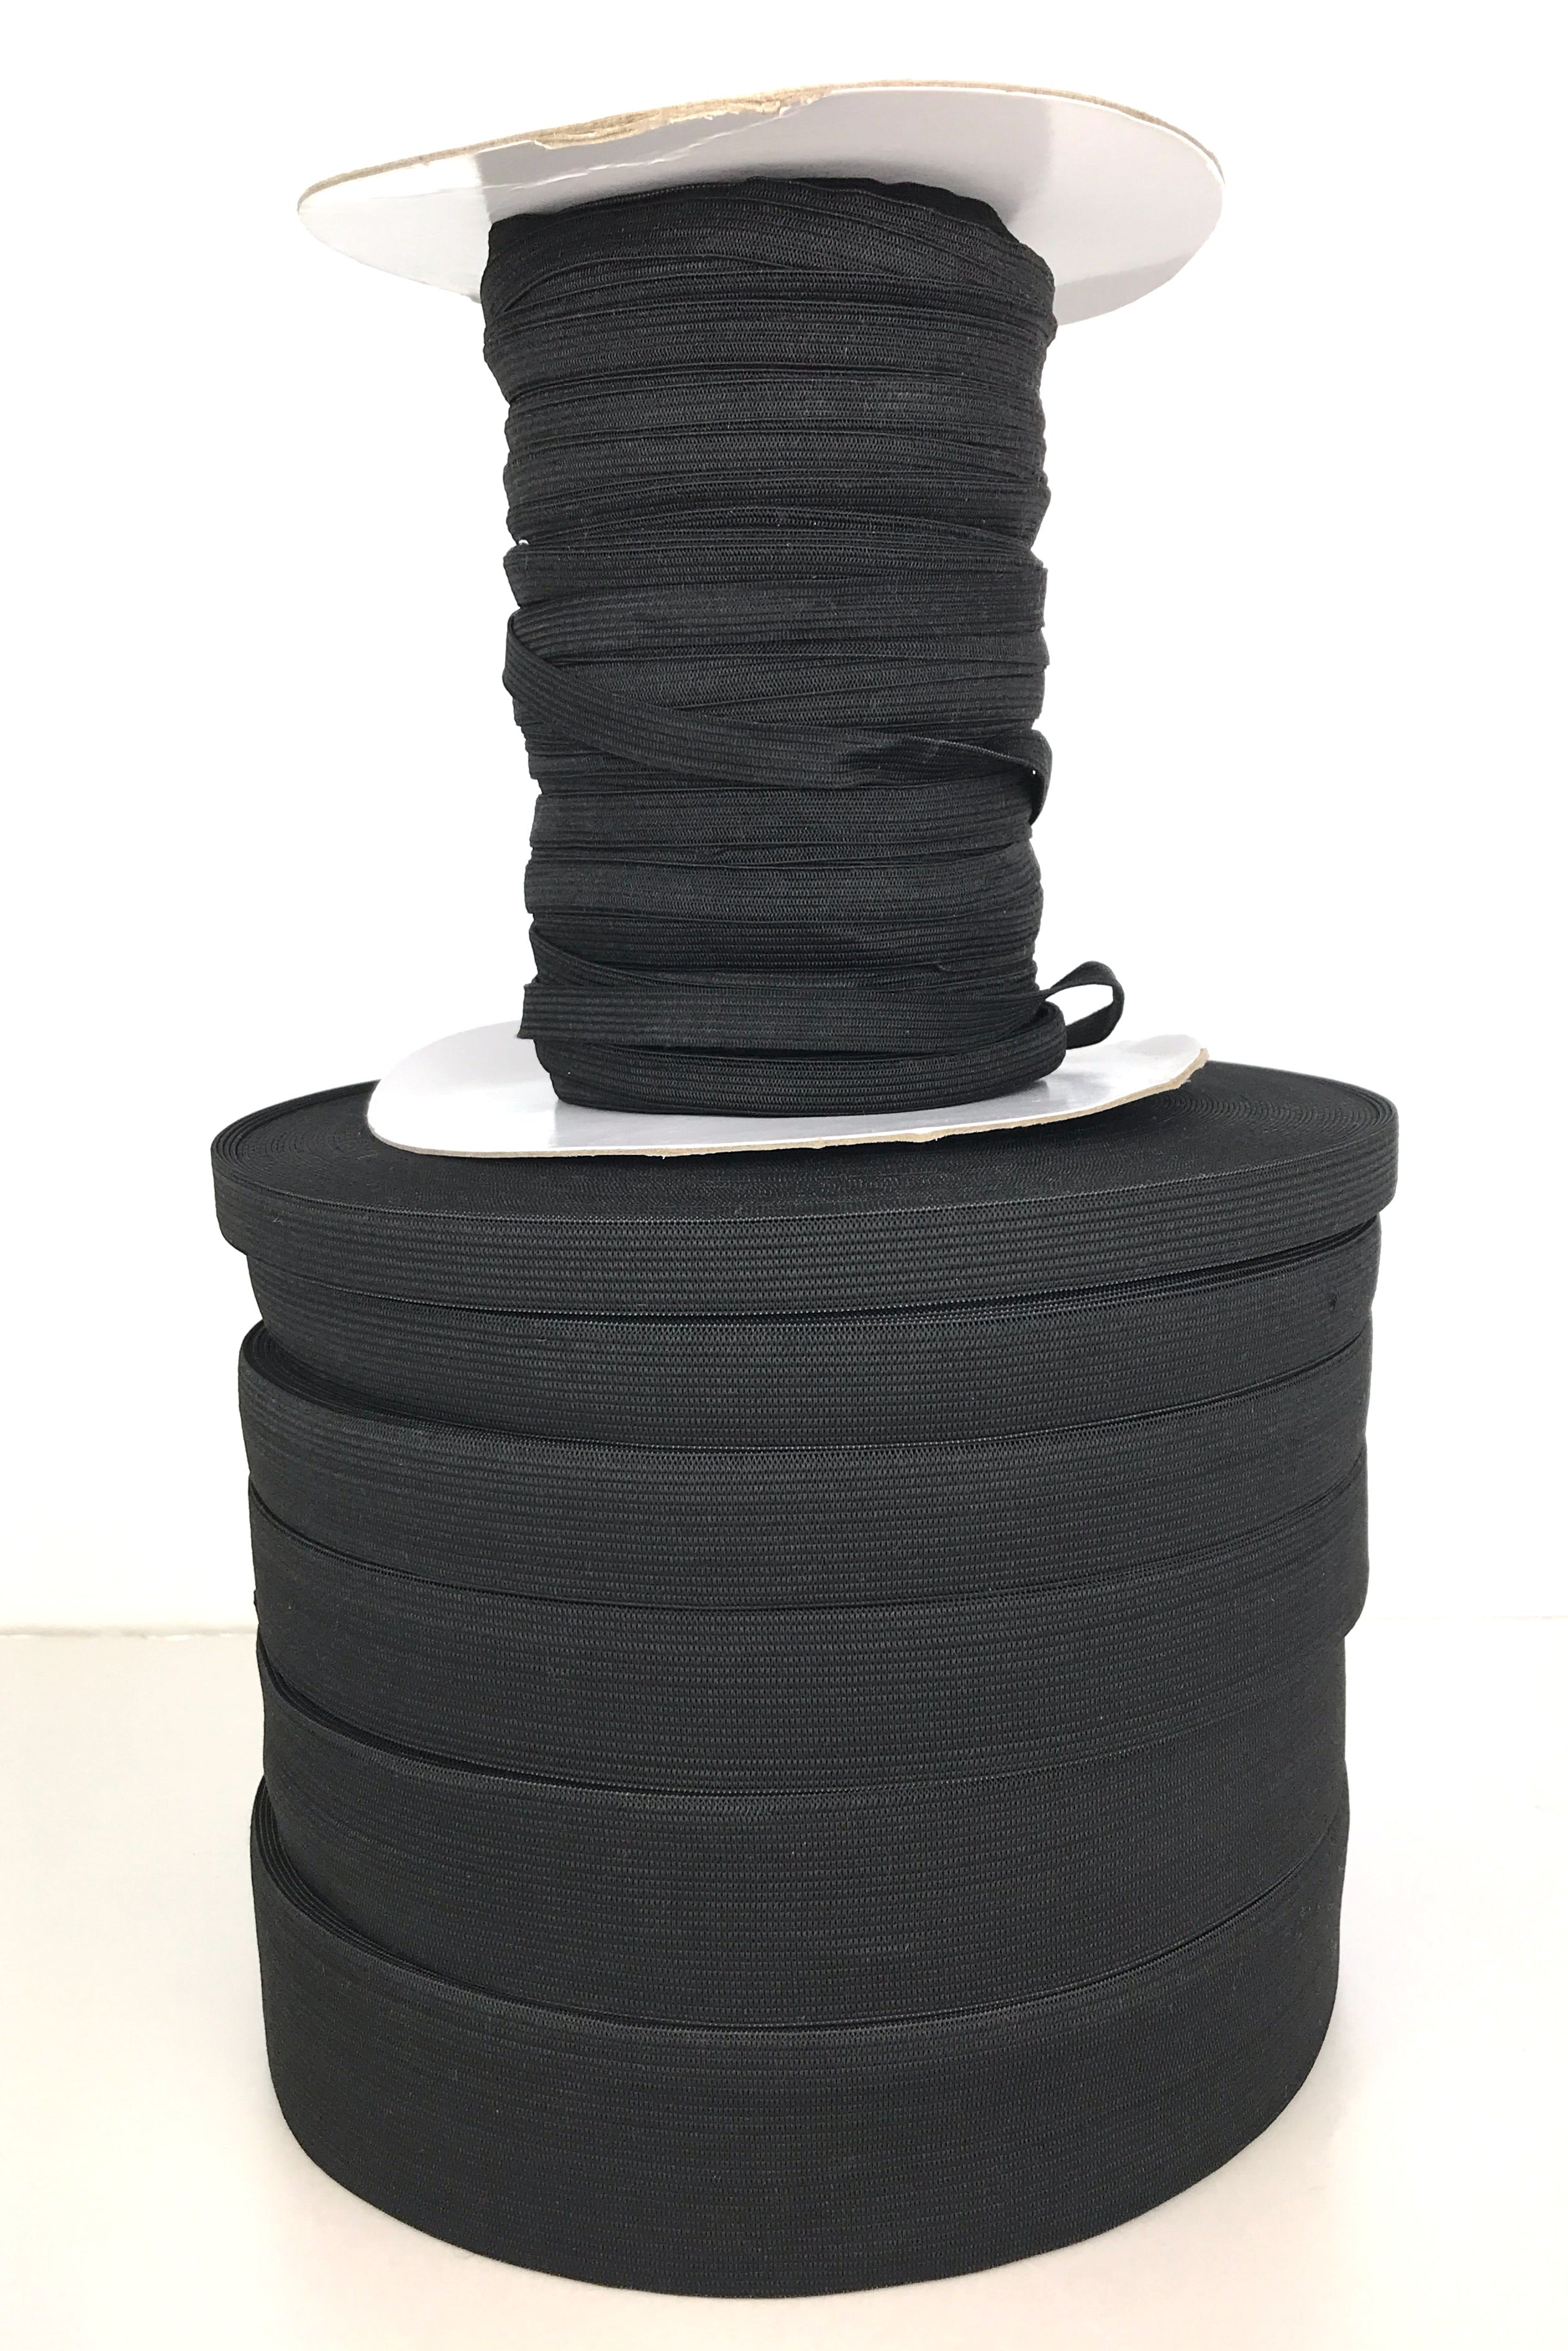 Sewing Elastic Band 20mm - Black x 3 metres